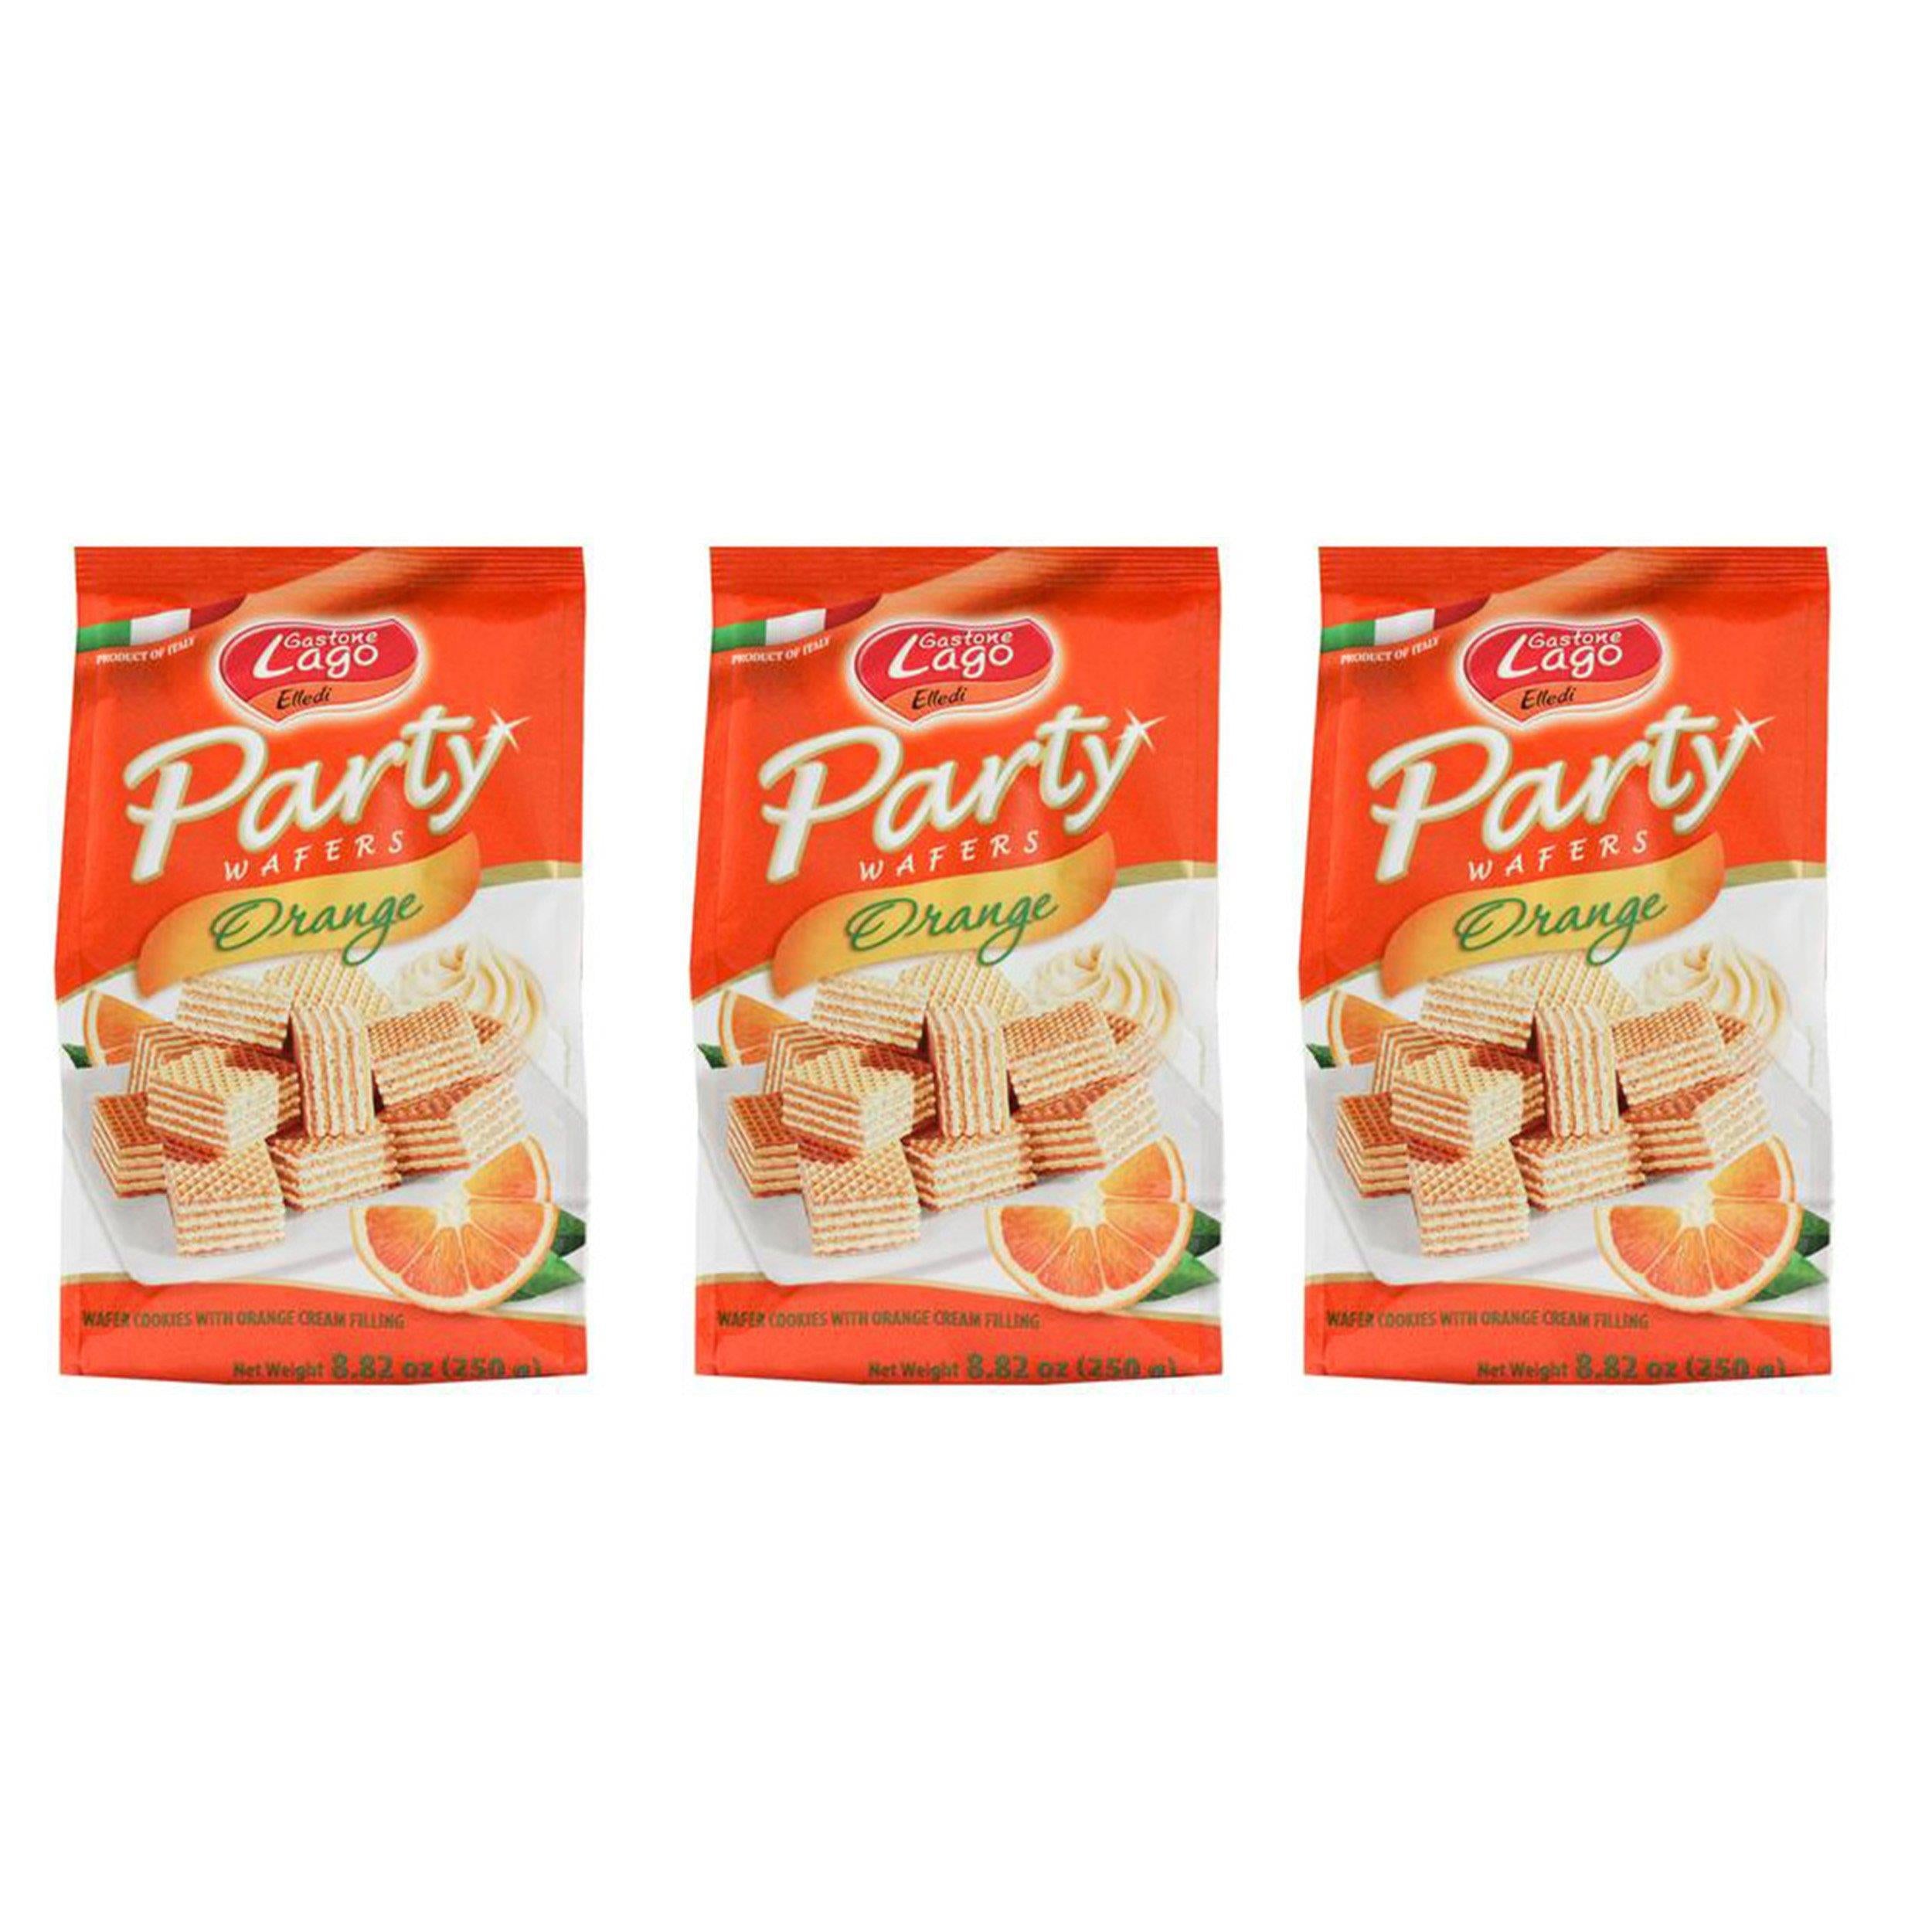 Gastone Lago Party Wafers Orange Cream Filling 8.82 oz, 250g (Pack of 3) (Orange, 3-Pack)